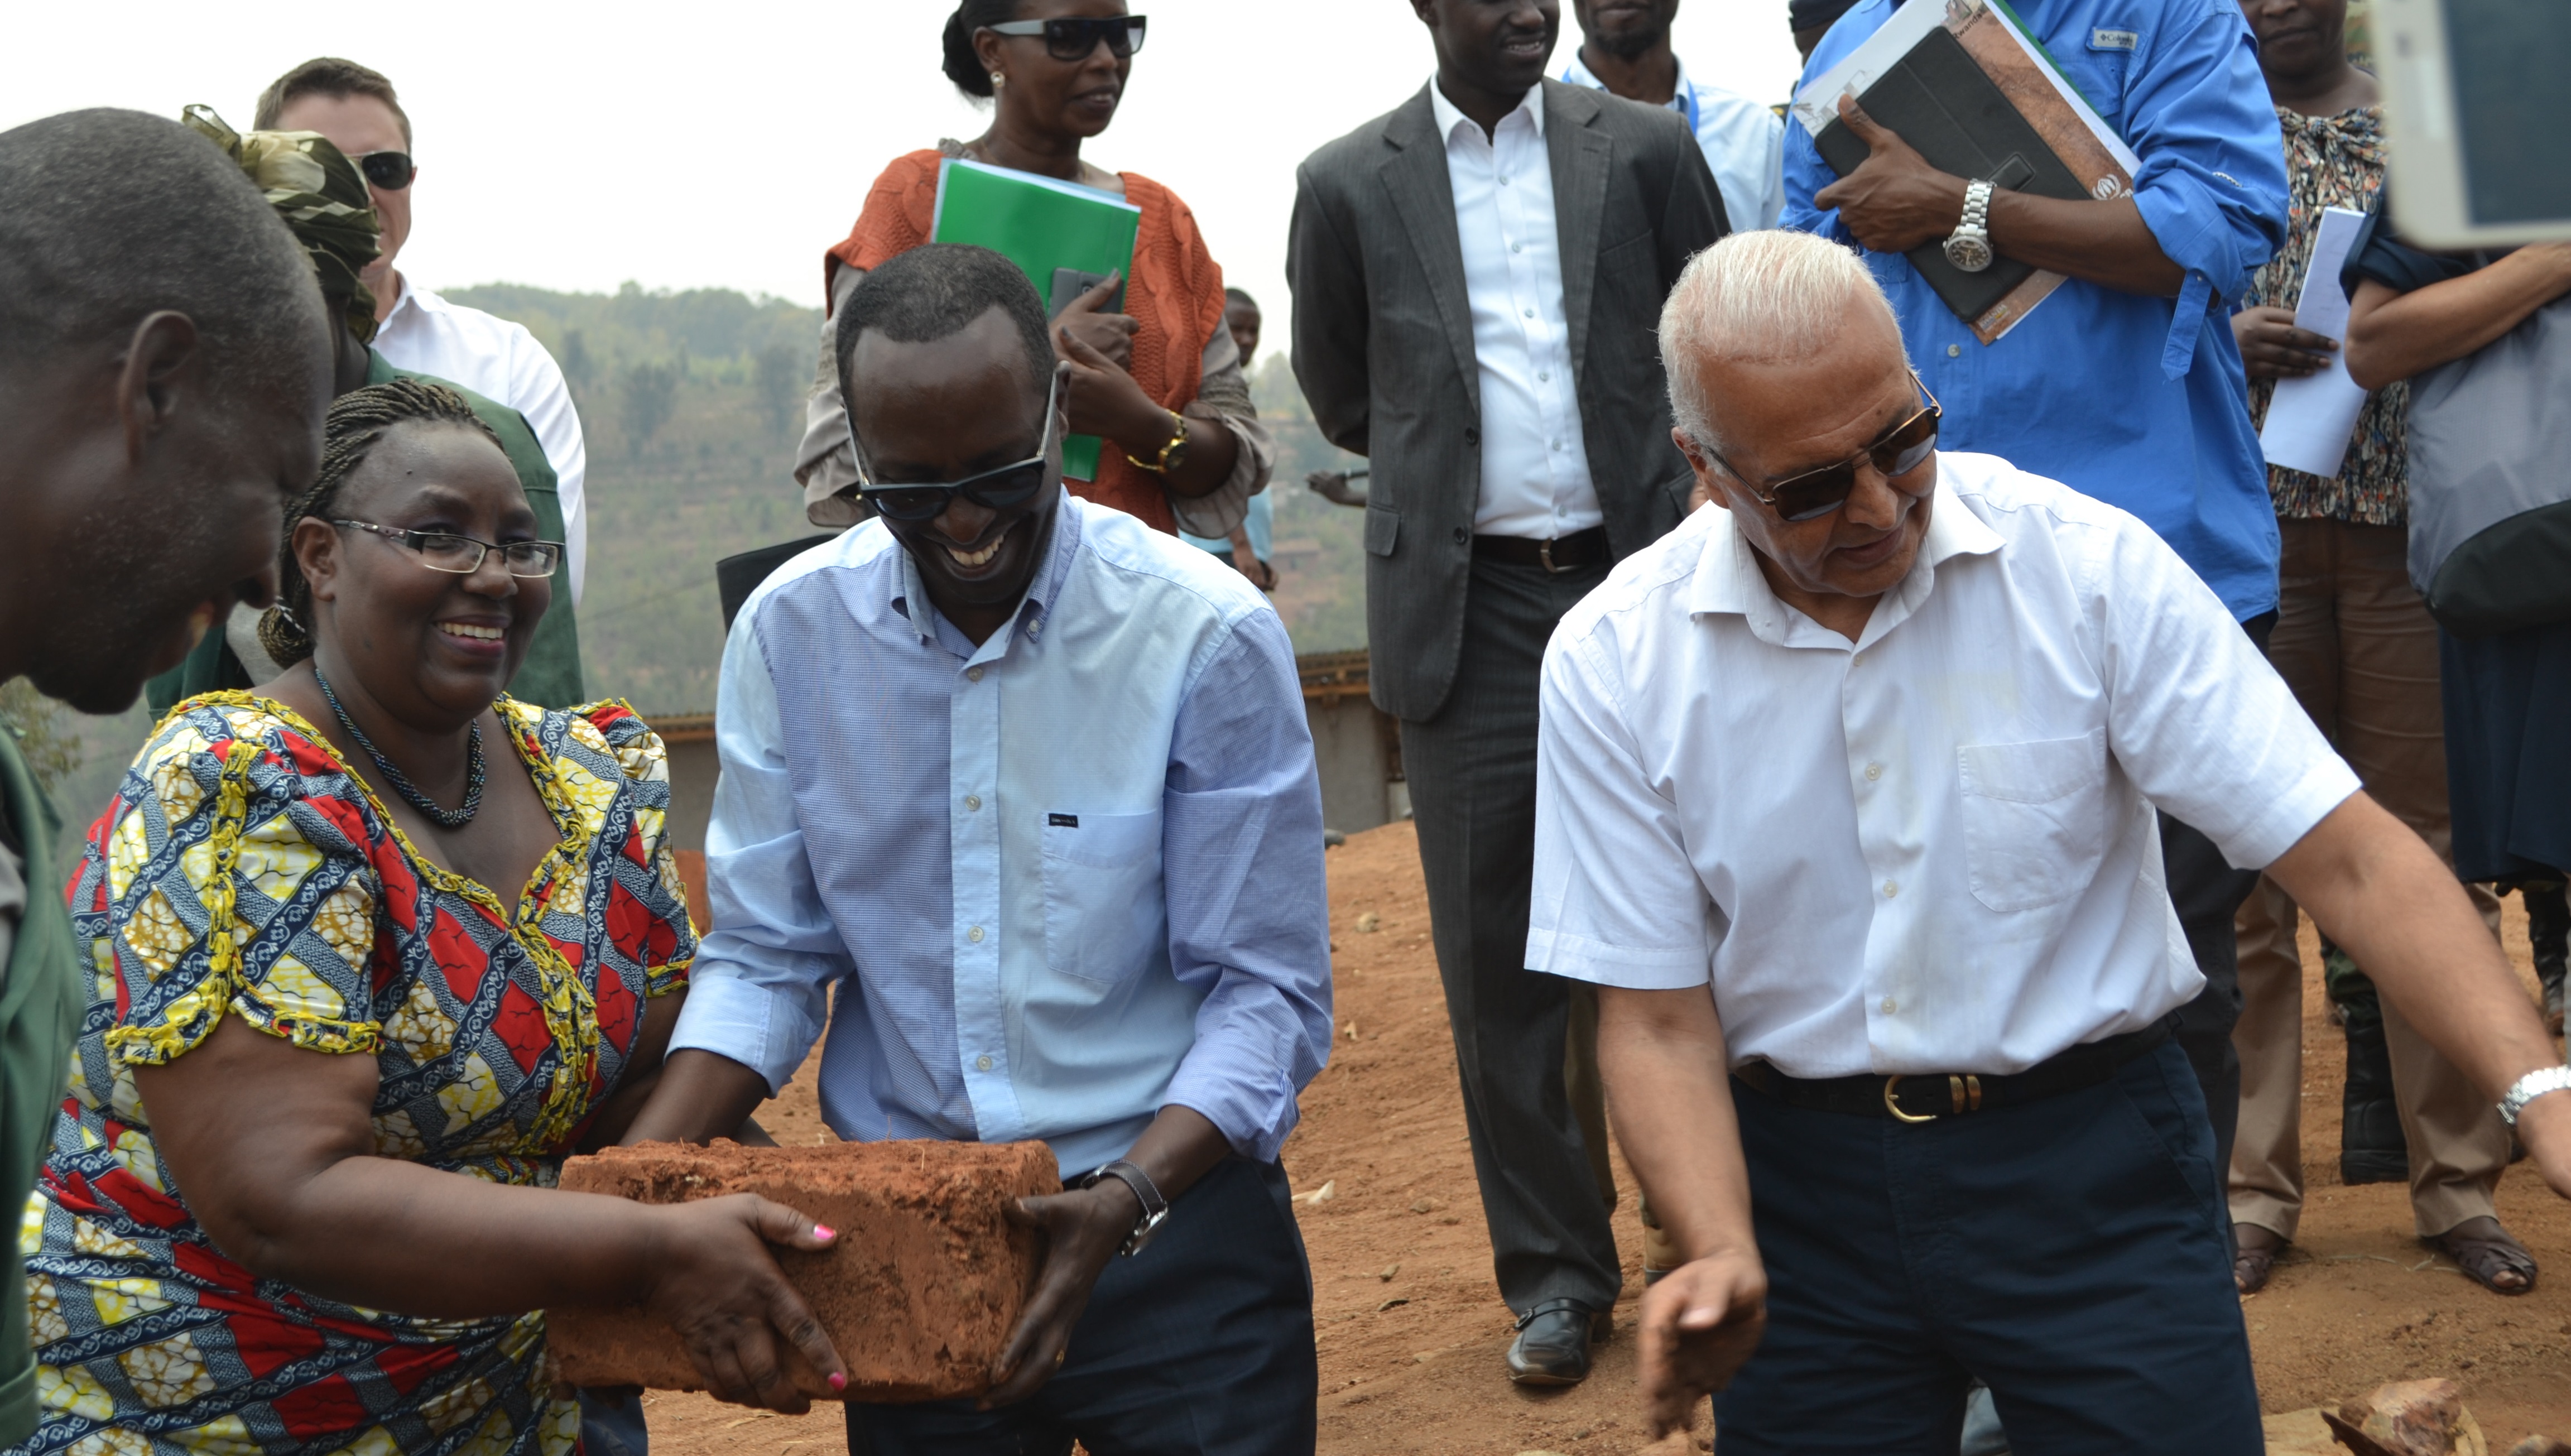 Ambassadors in Rwanda visit Mugombwa Refugee Camp following Rwanda’s Commitments at the Leaders’ Summit on Refugees convened by United States President Obama